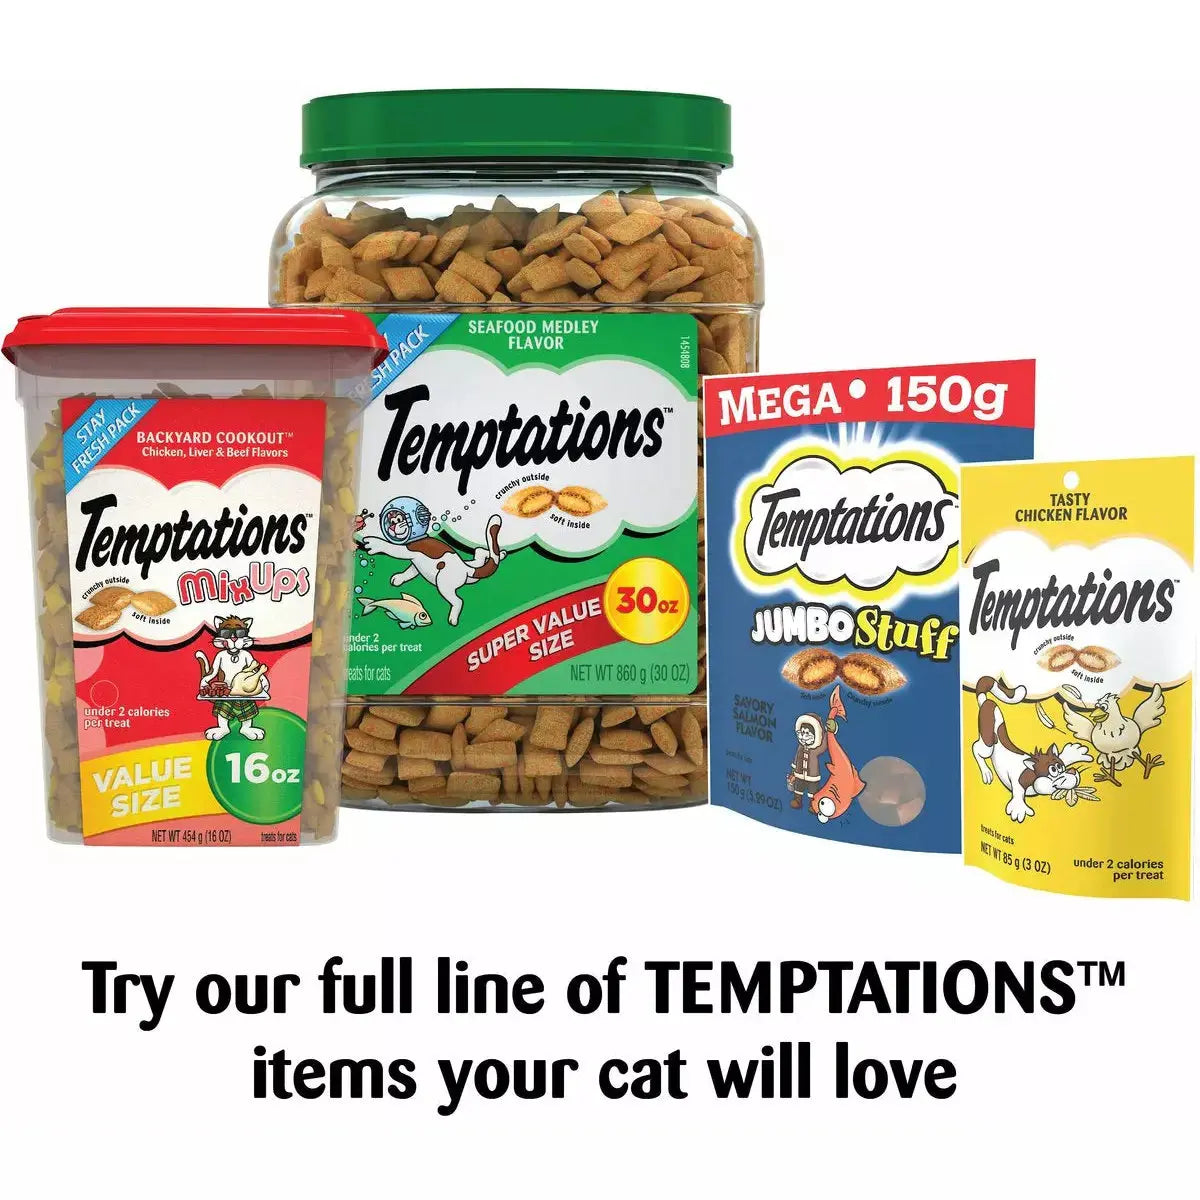 Temptations Tantalizing Turkey Flavor Cat Treat Temptations